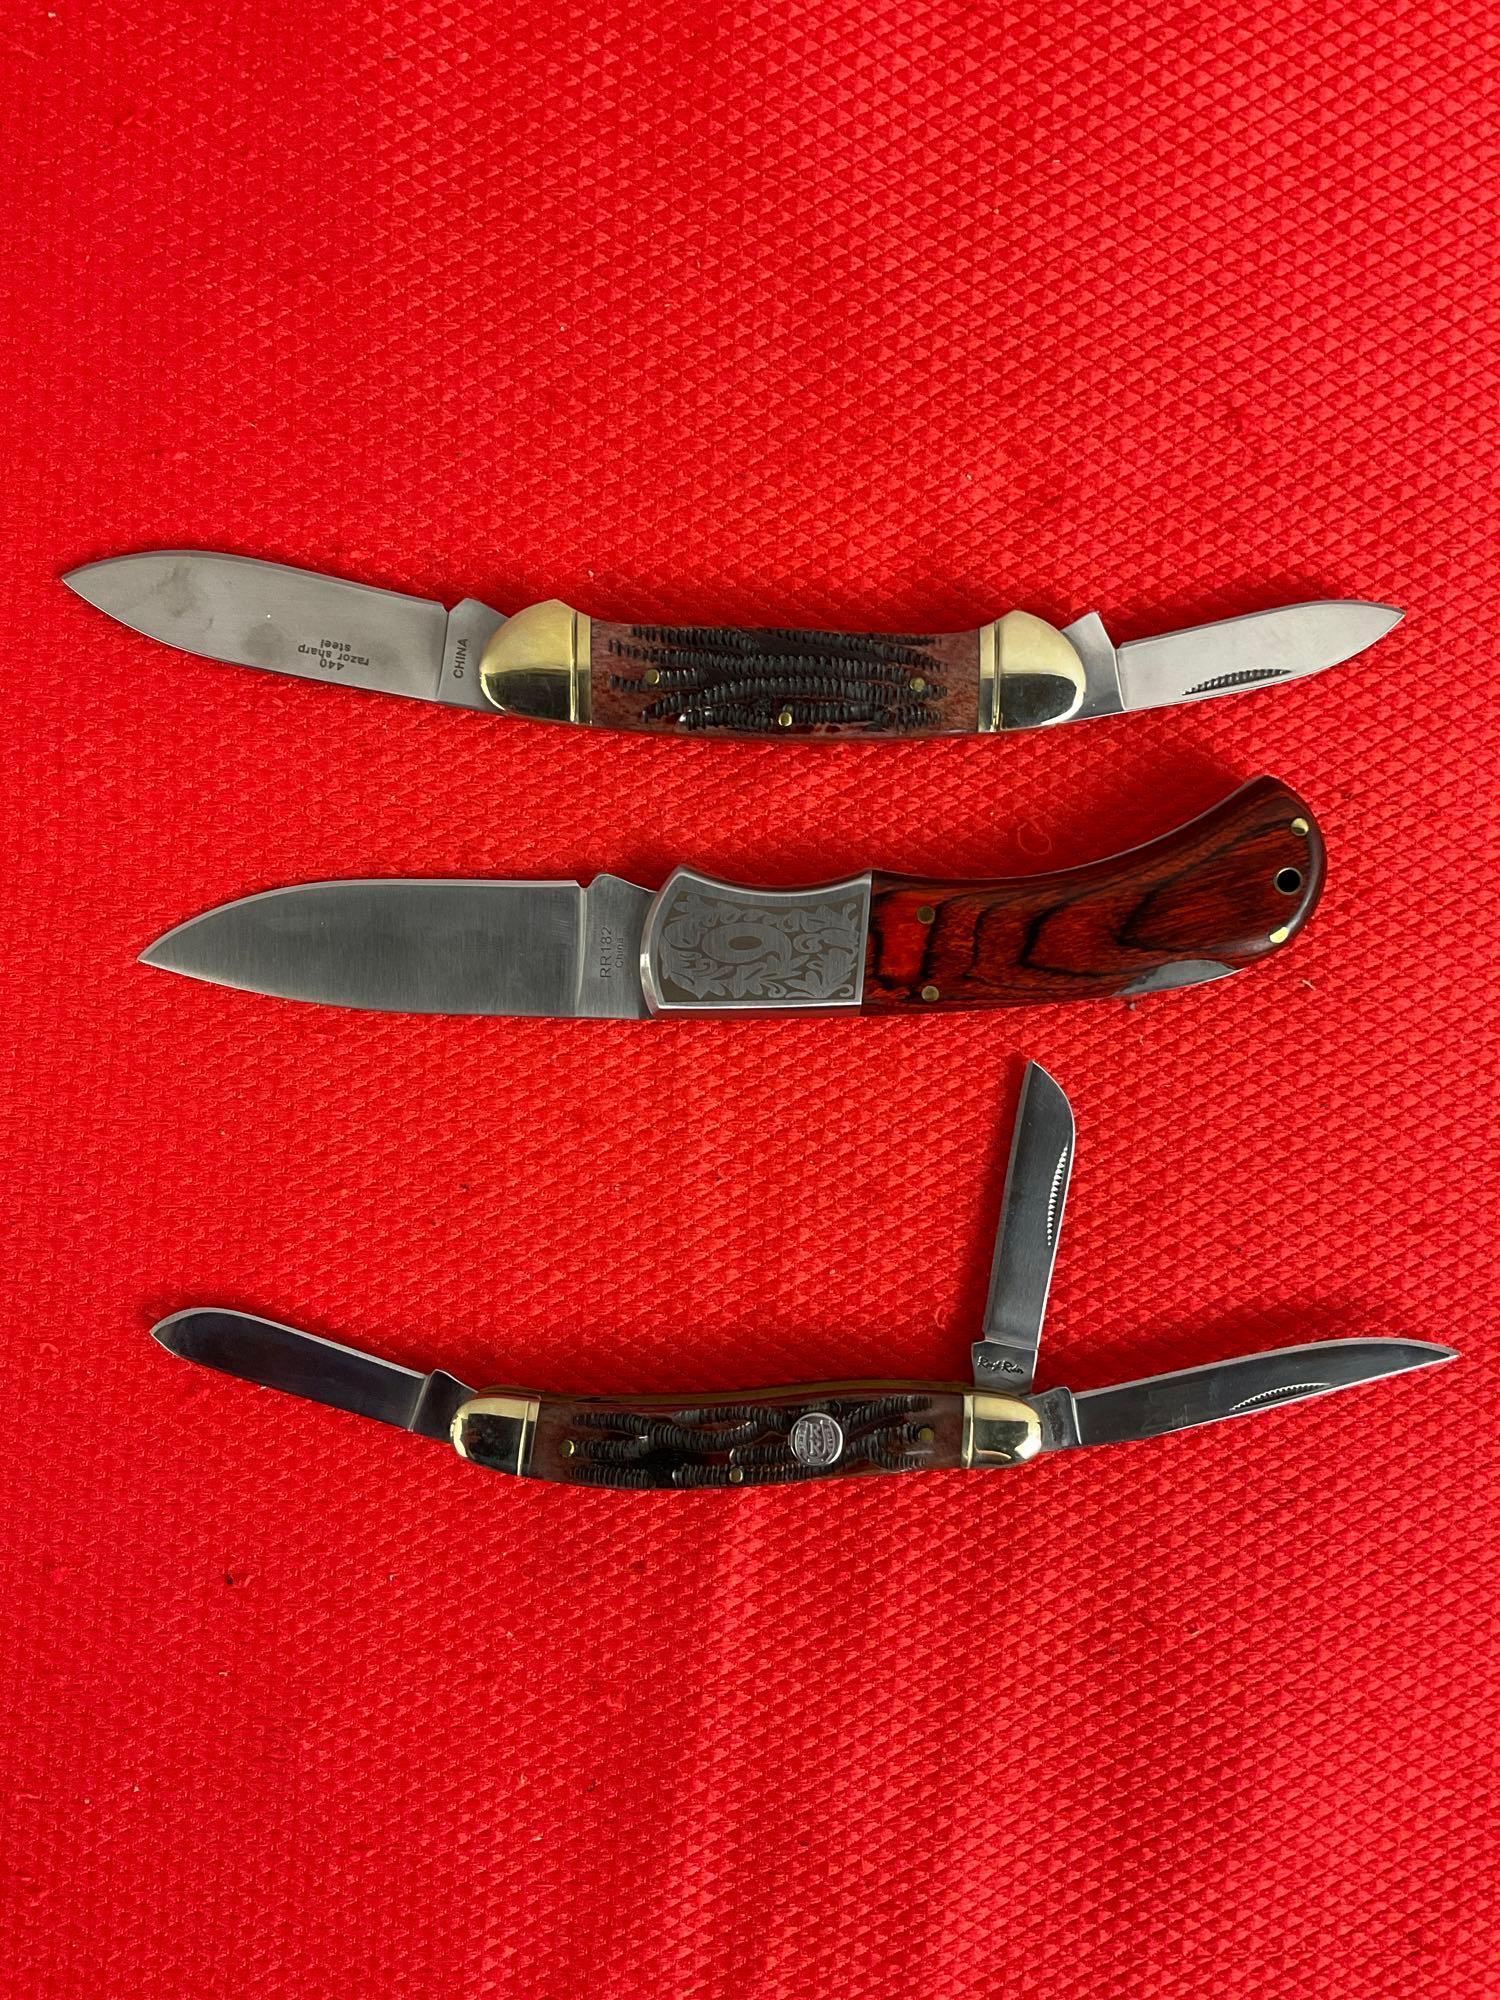 3 pcs Rough Rider 440 Steel Folding Pocket Knife Assortment. Models RR156, 158 & 182. NIB. See pi...